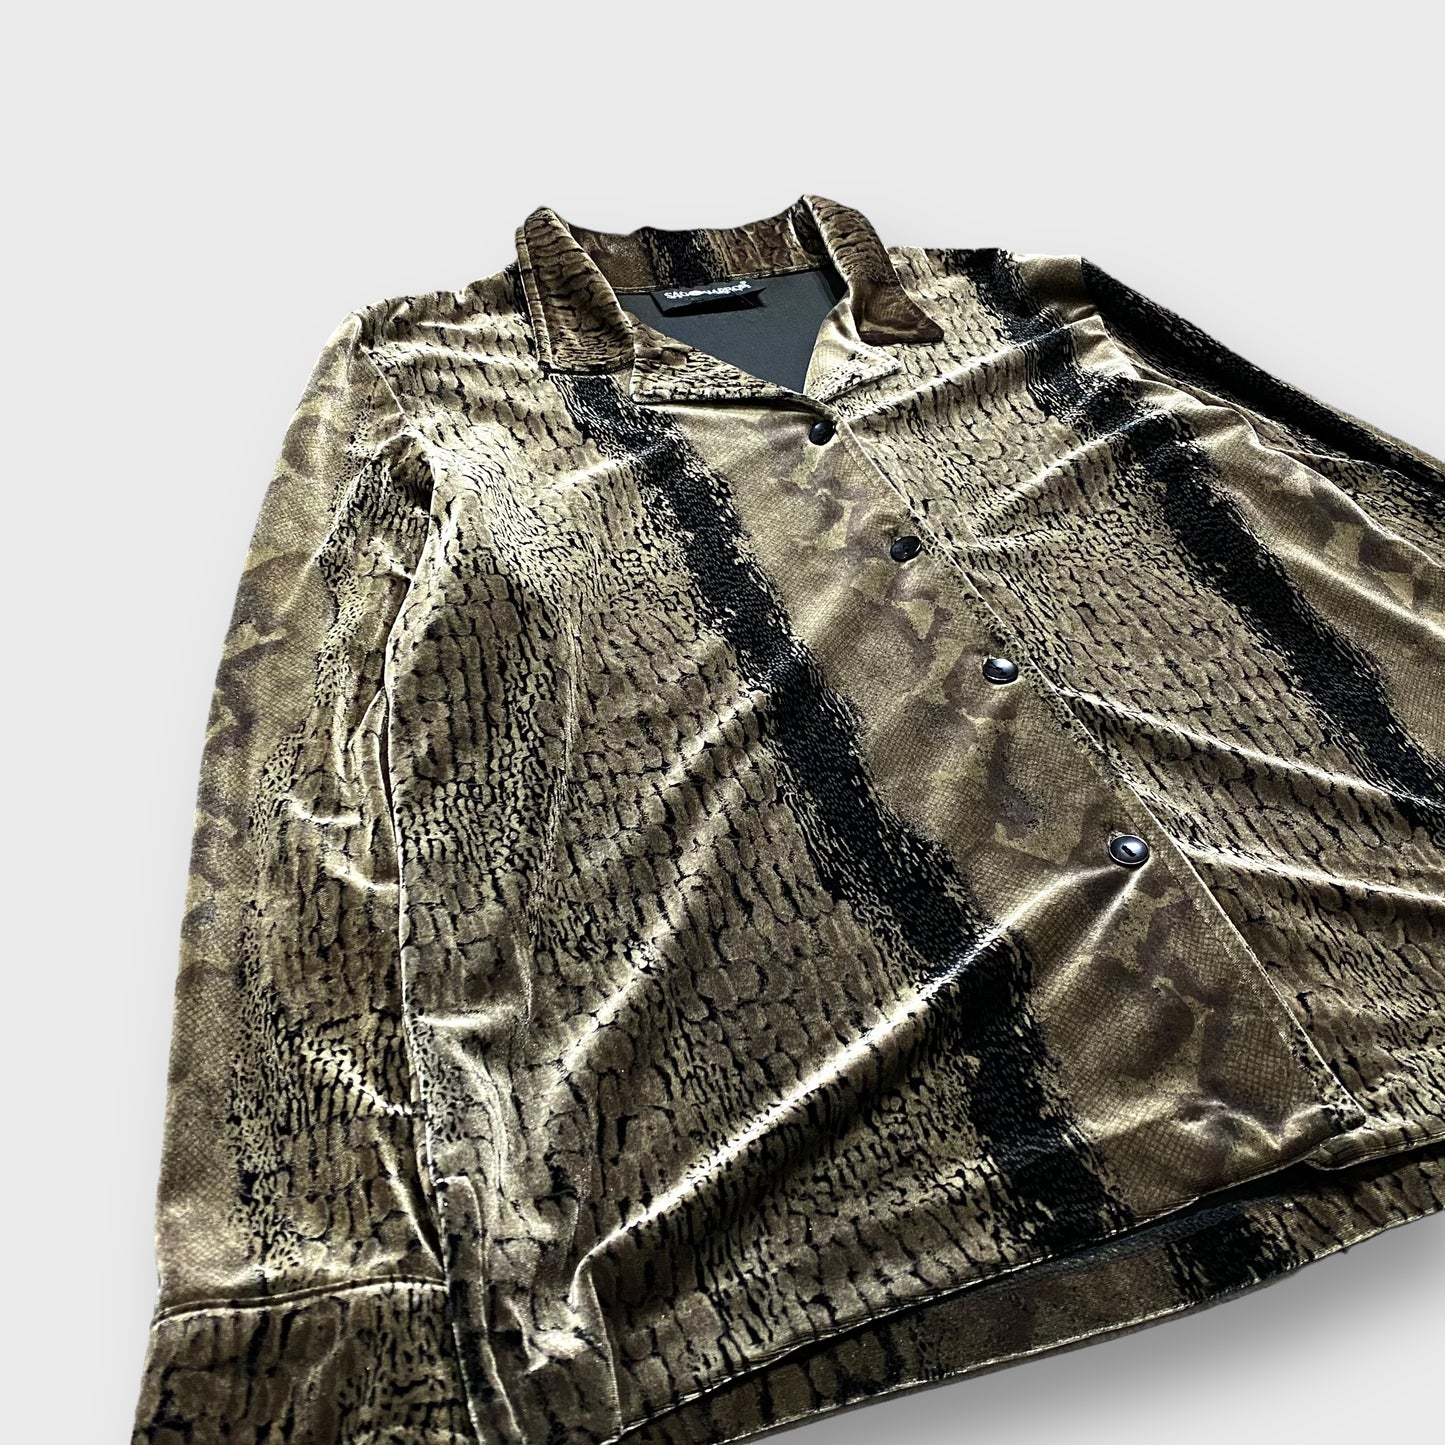 90's "SAG HARBOR" Python pattern velour shirt